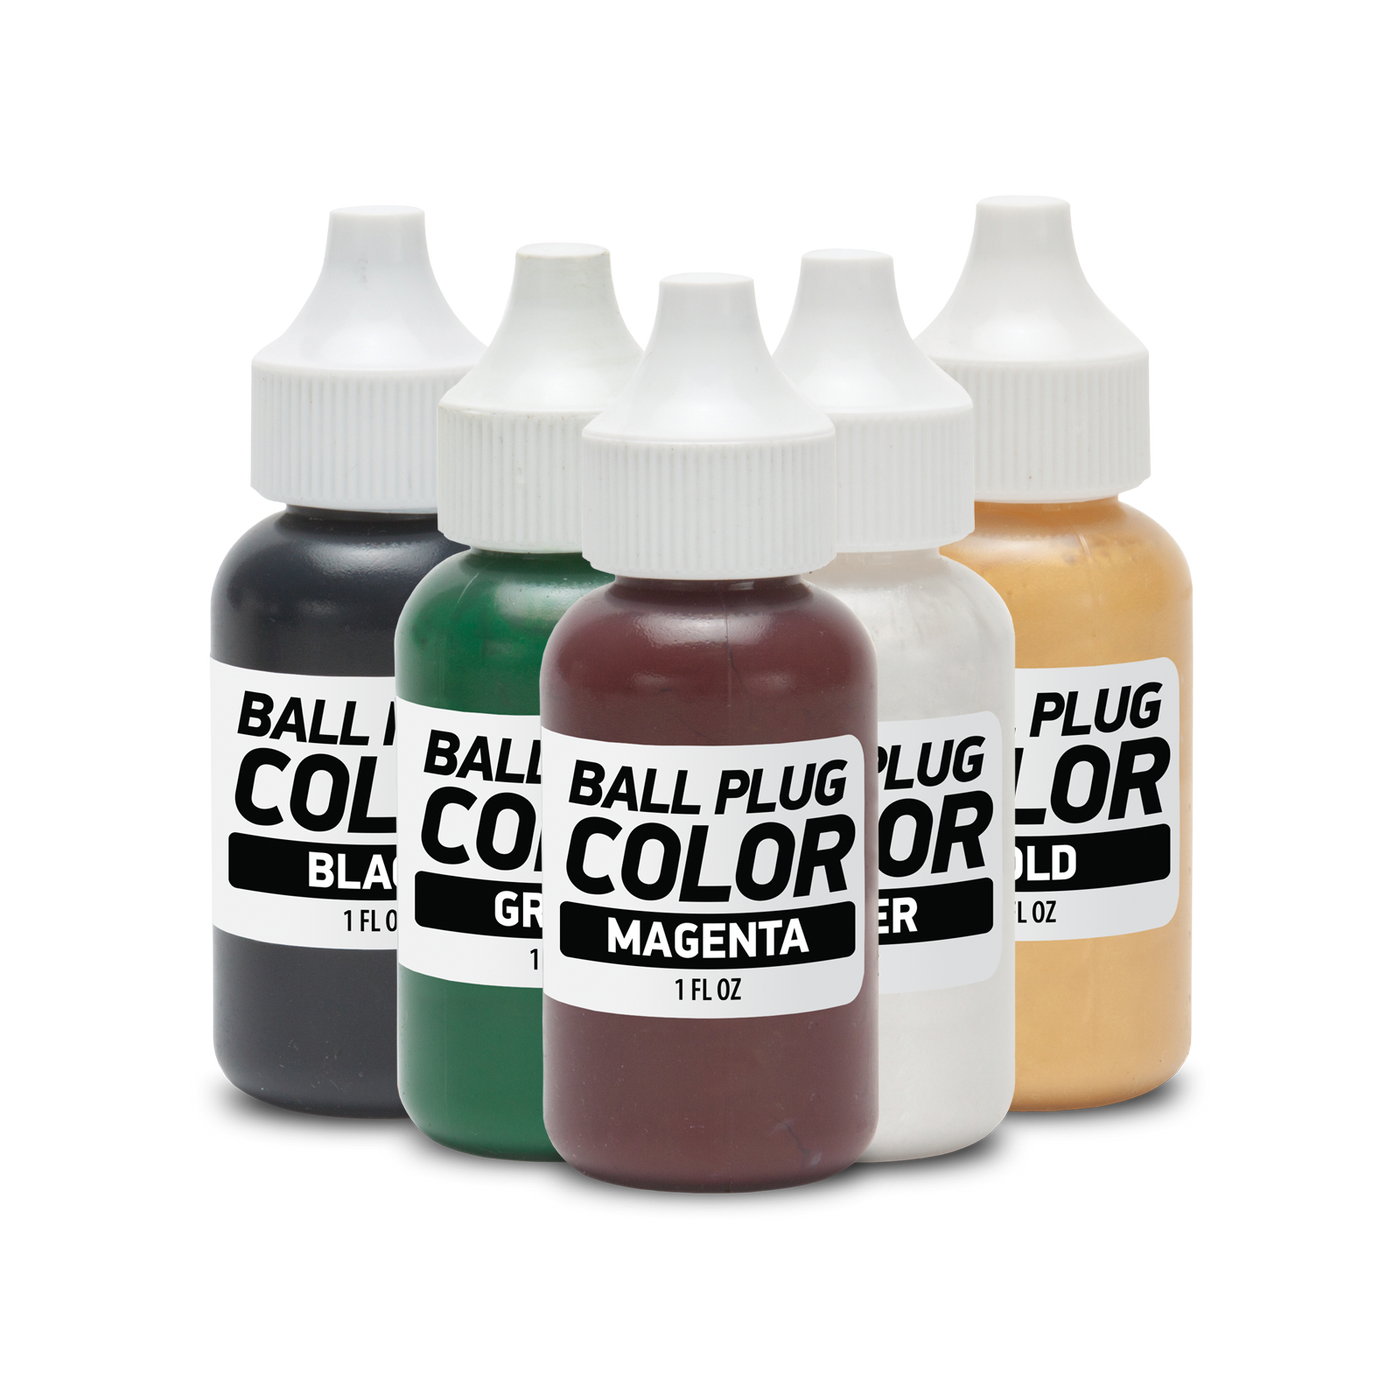 Arrangement of five ball plug color bottles